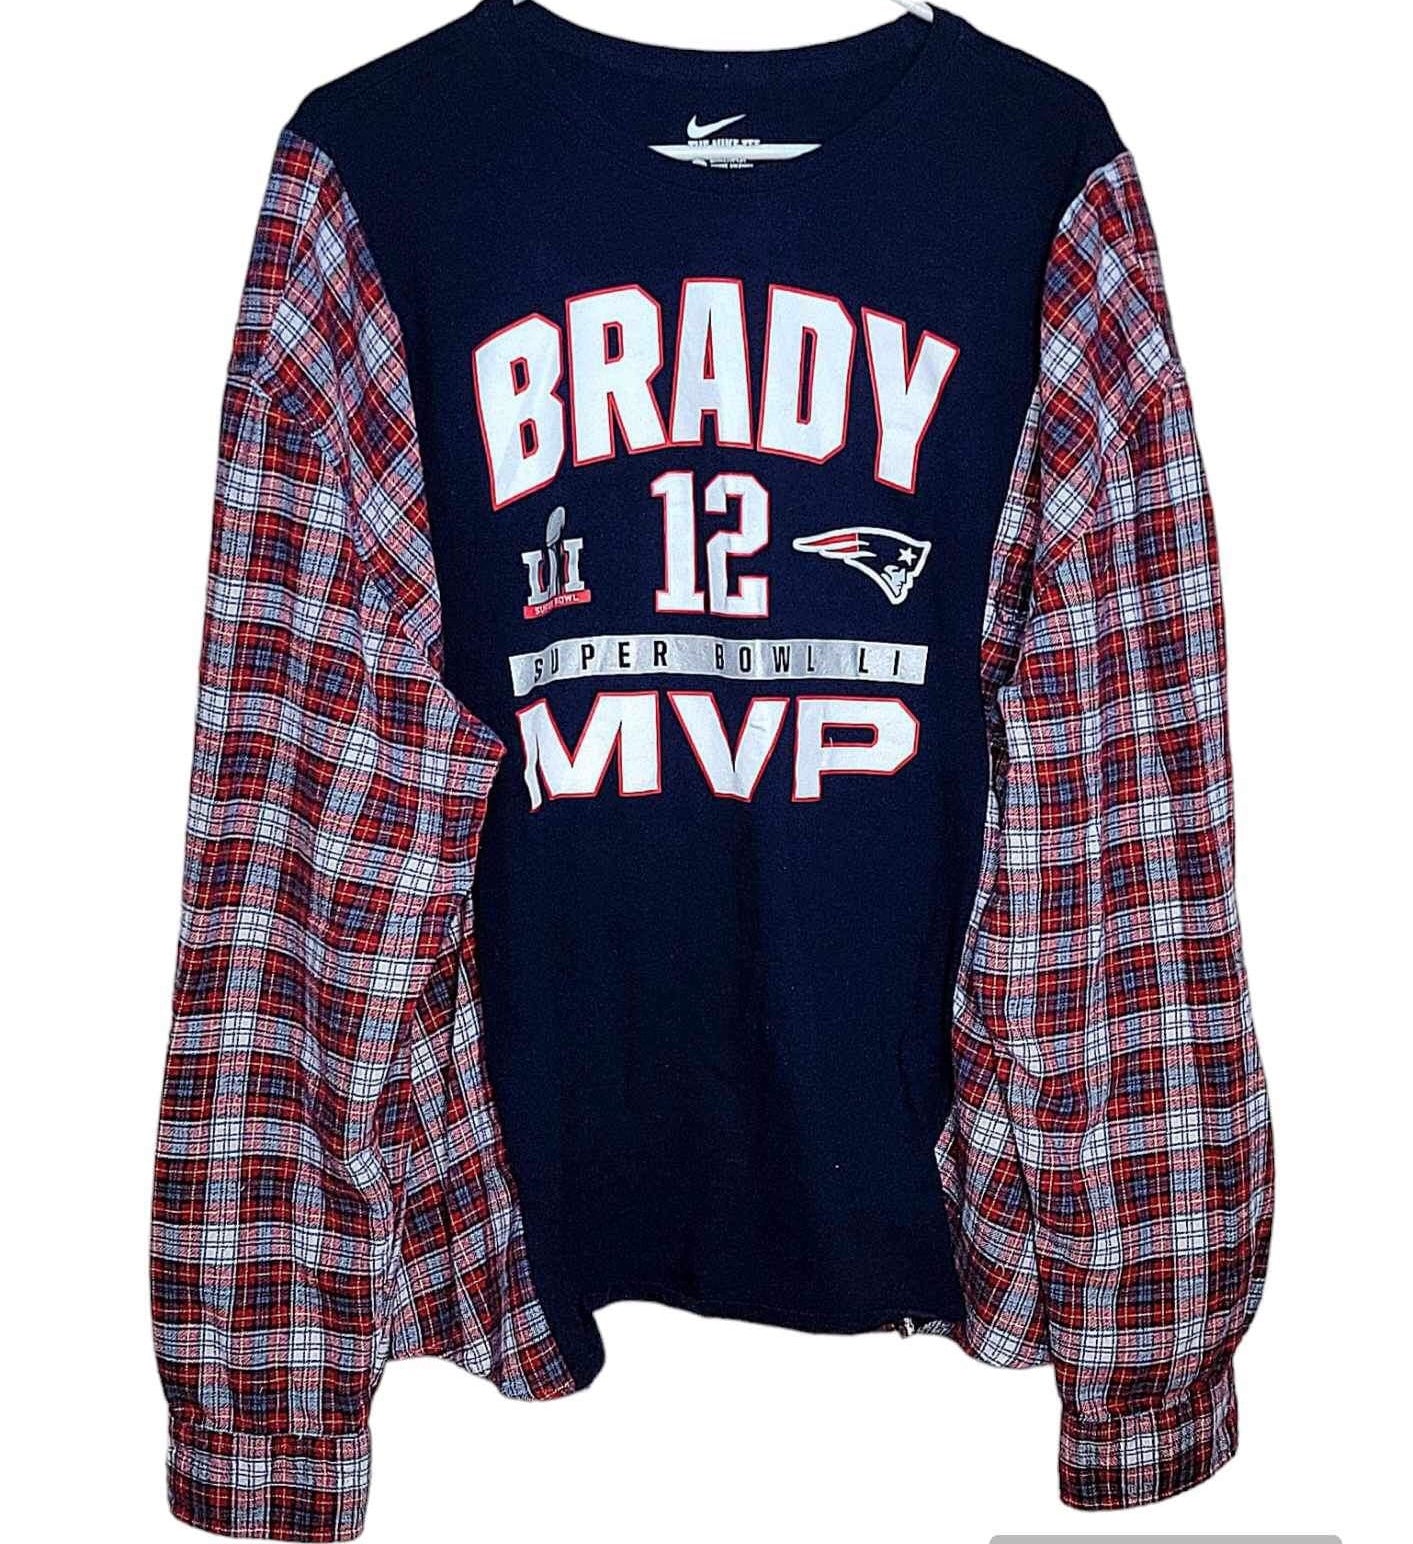 Brady MVP Flannel Rework